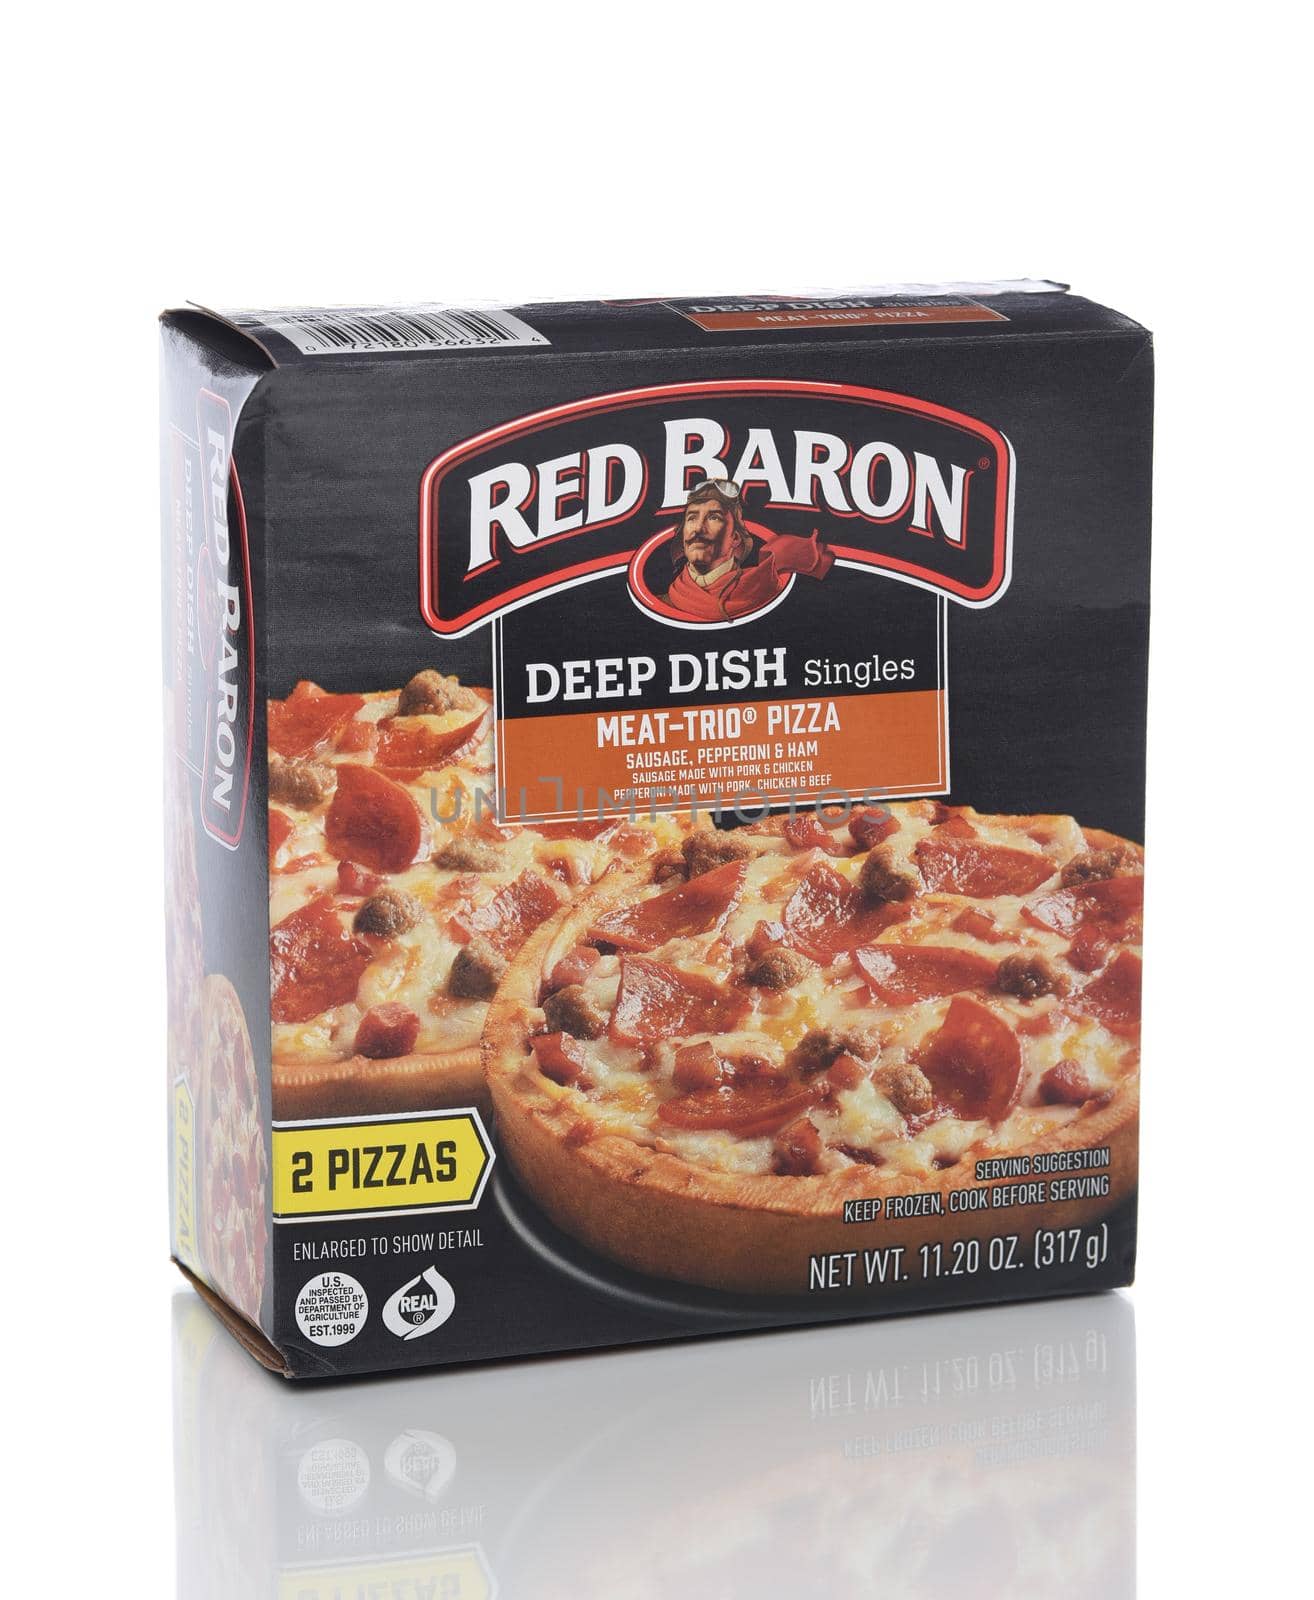 IRVINE, CALIFORNIA - 8 APRIL 2020: A box of Red Baron Deep Dish Meat-Trio singles frozen pizza.